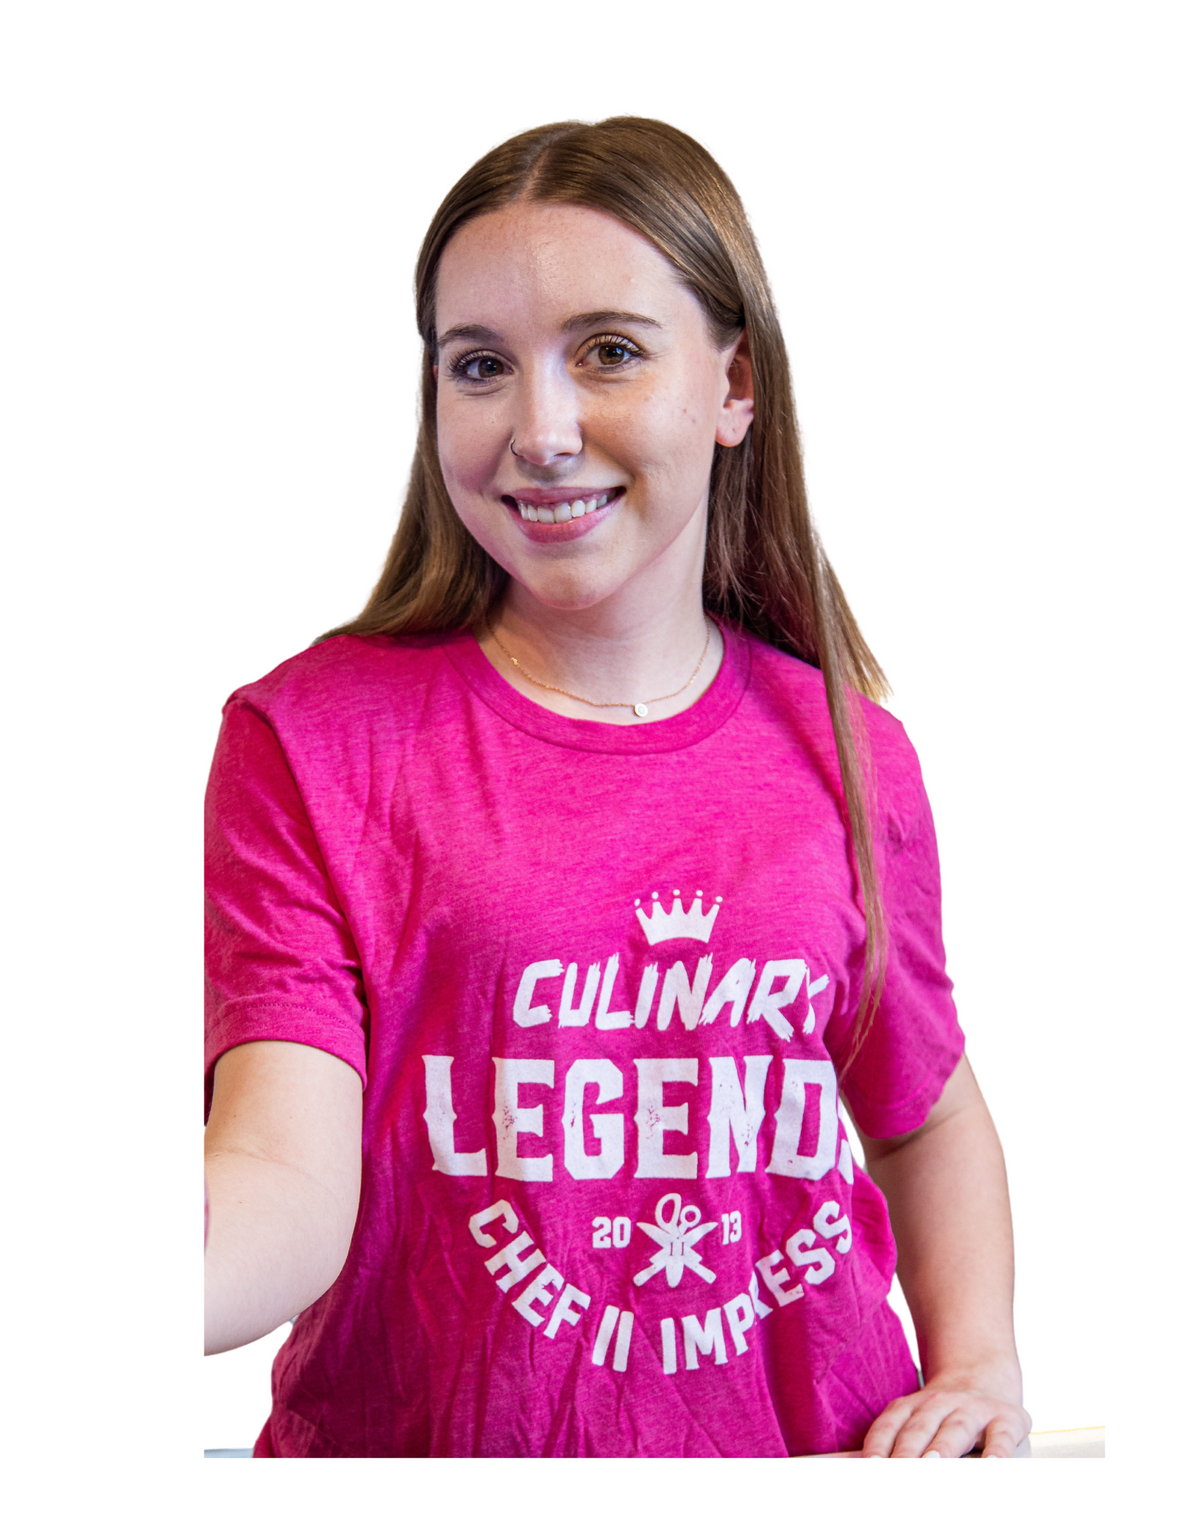 Culinary Legends T-Shirts